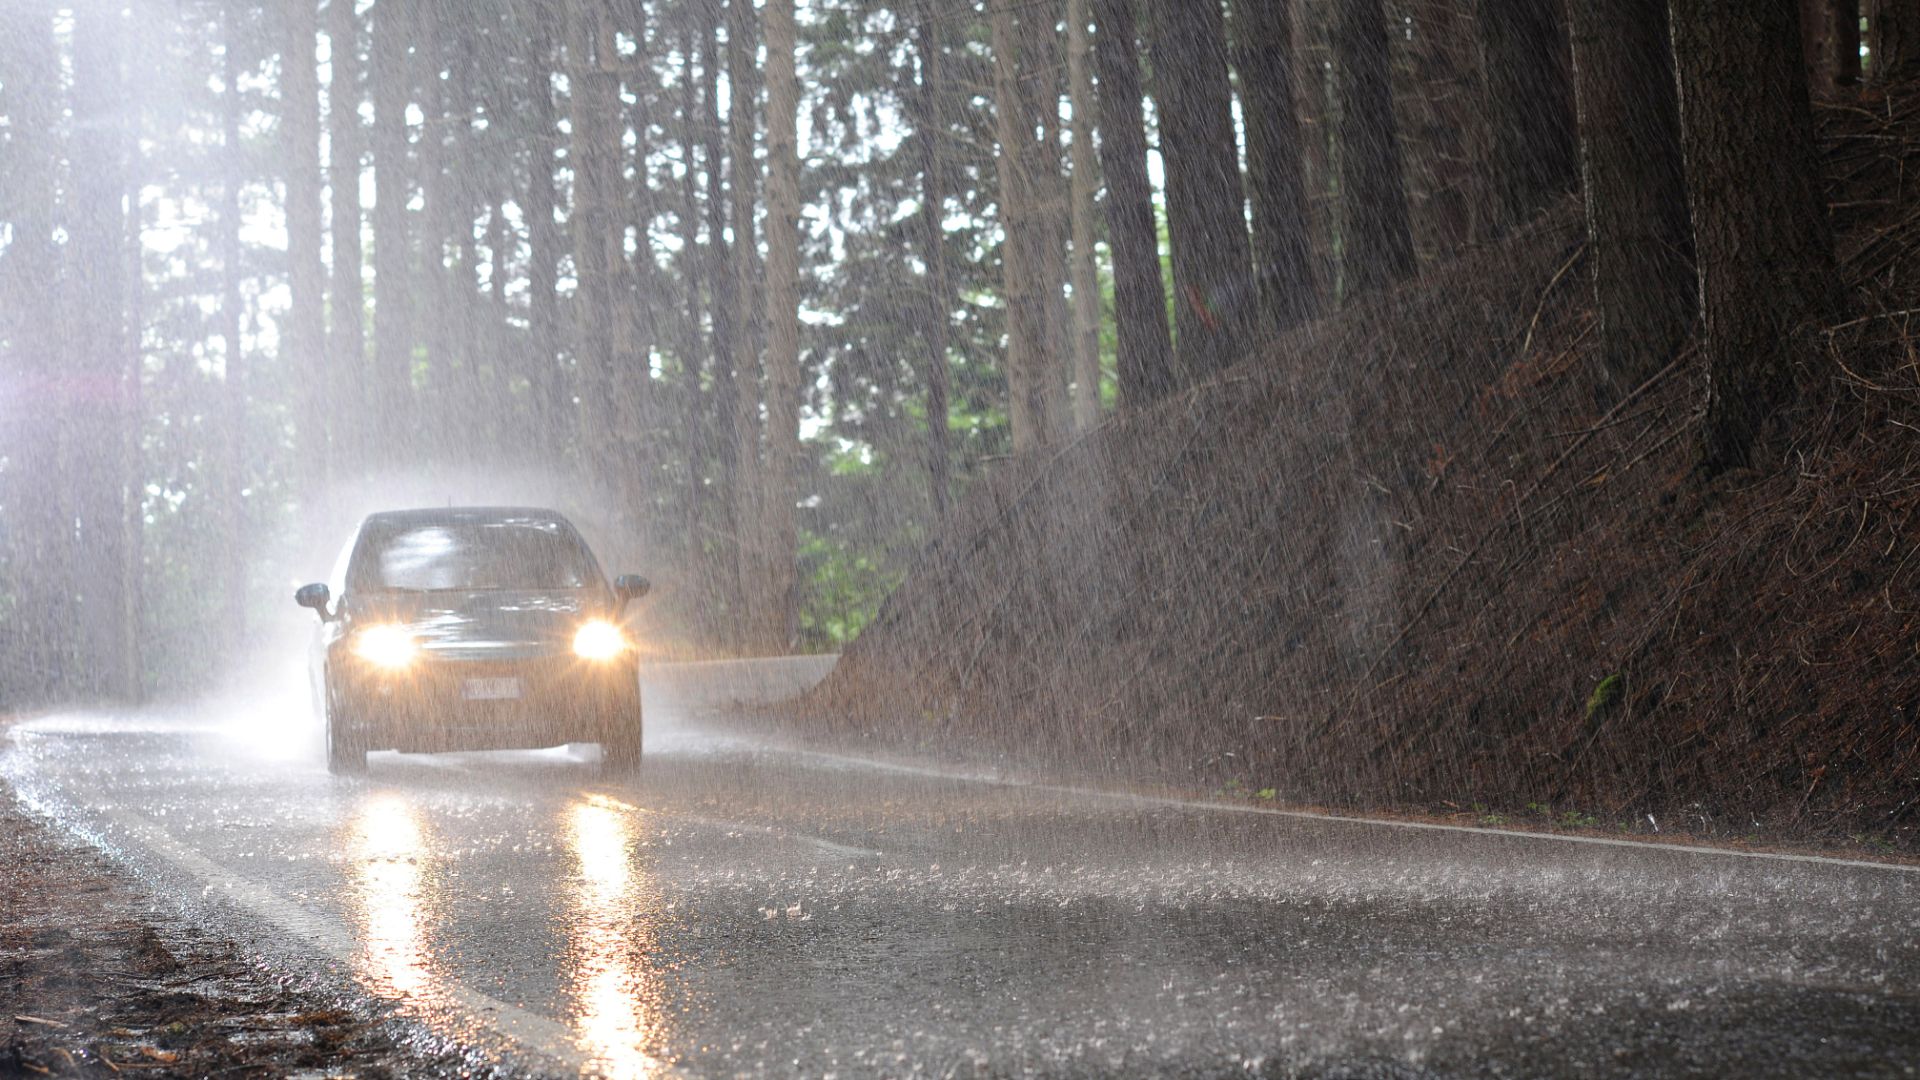 a car driving down a wet road in the rain.